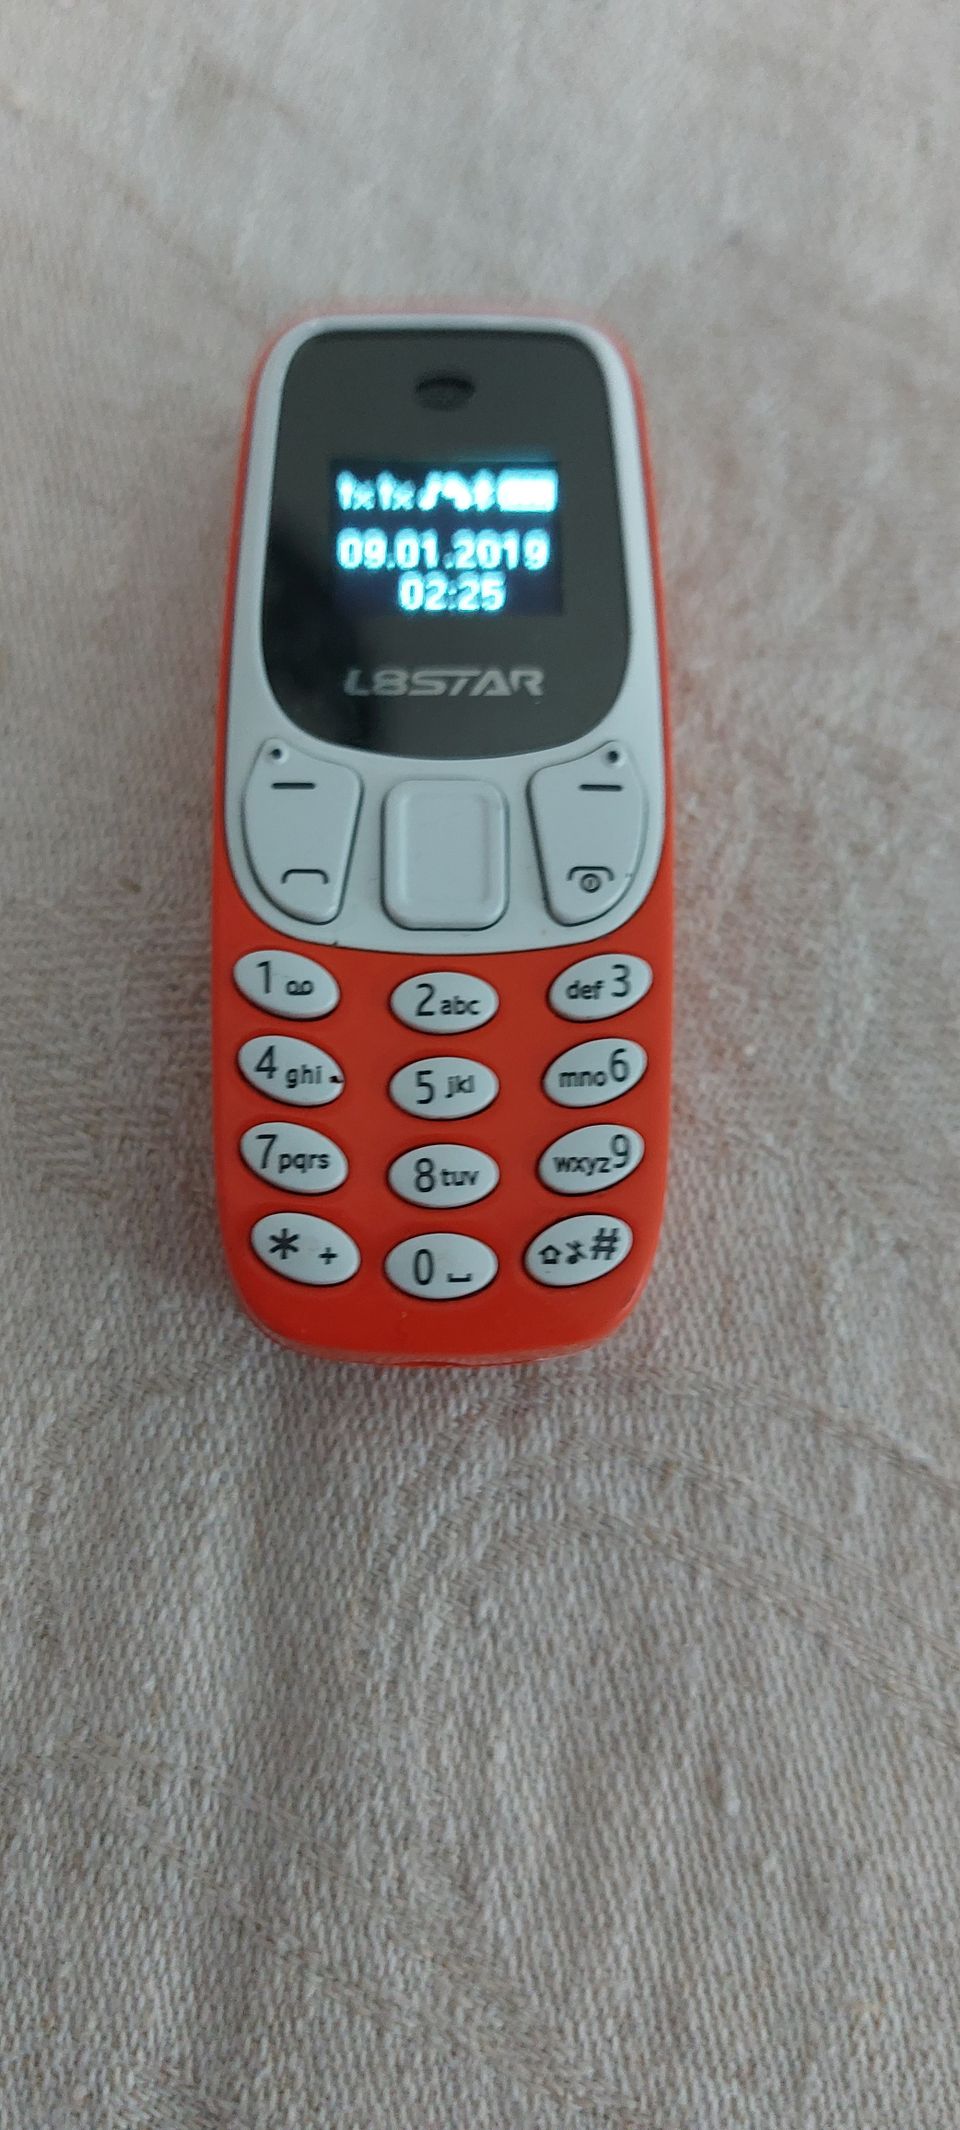 Nokia mini puhelin